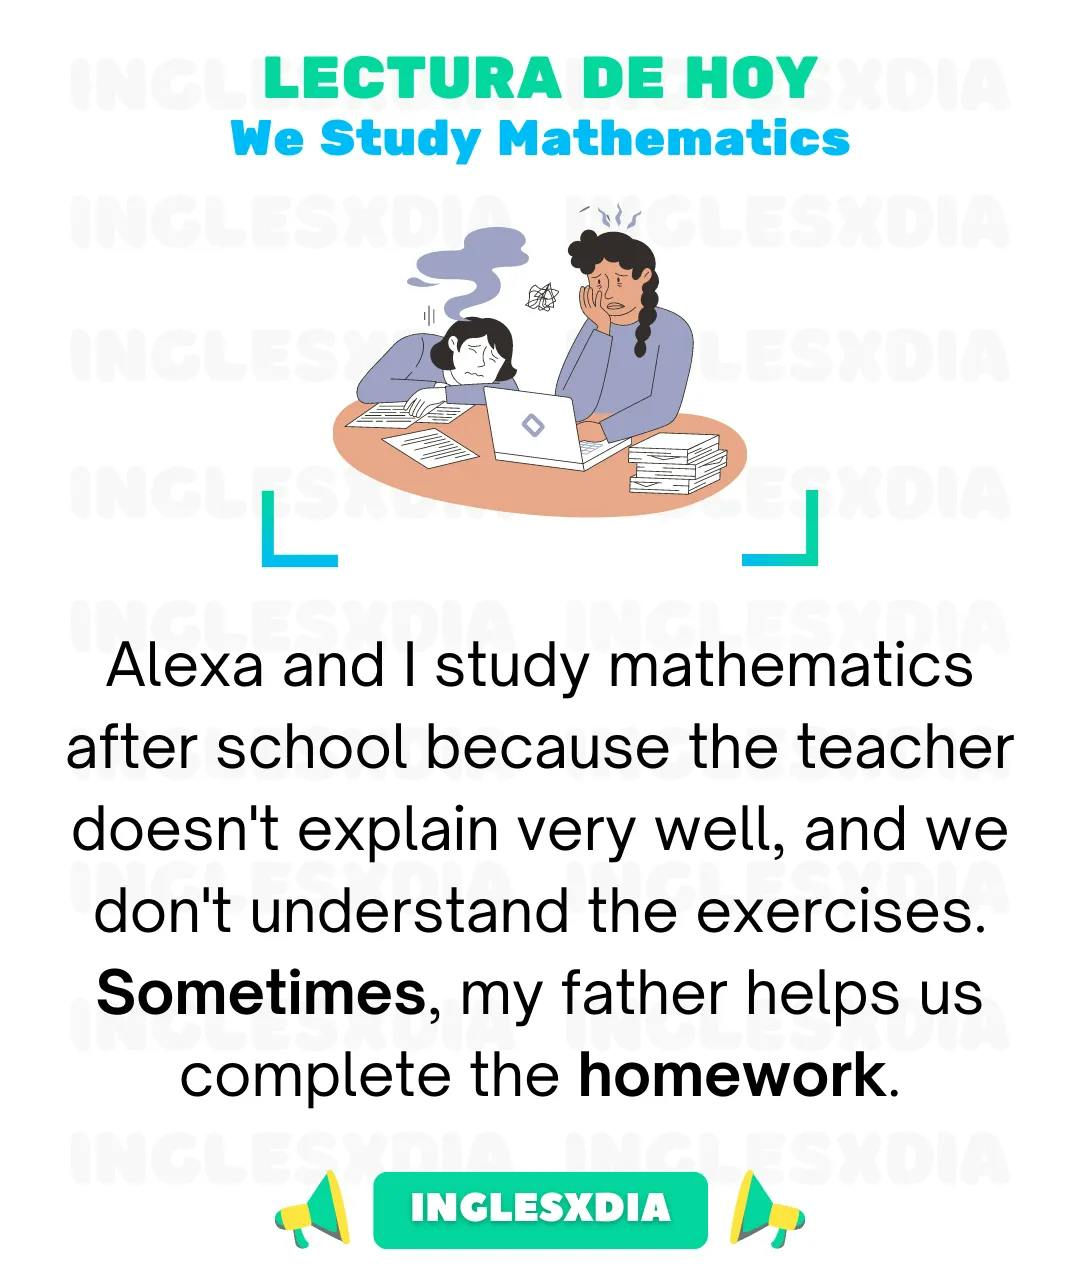 We Study Mathematics